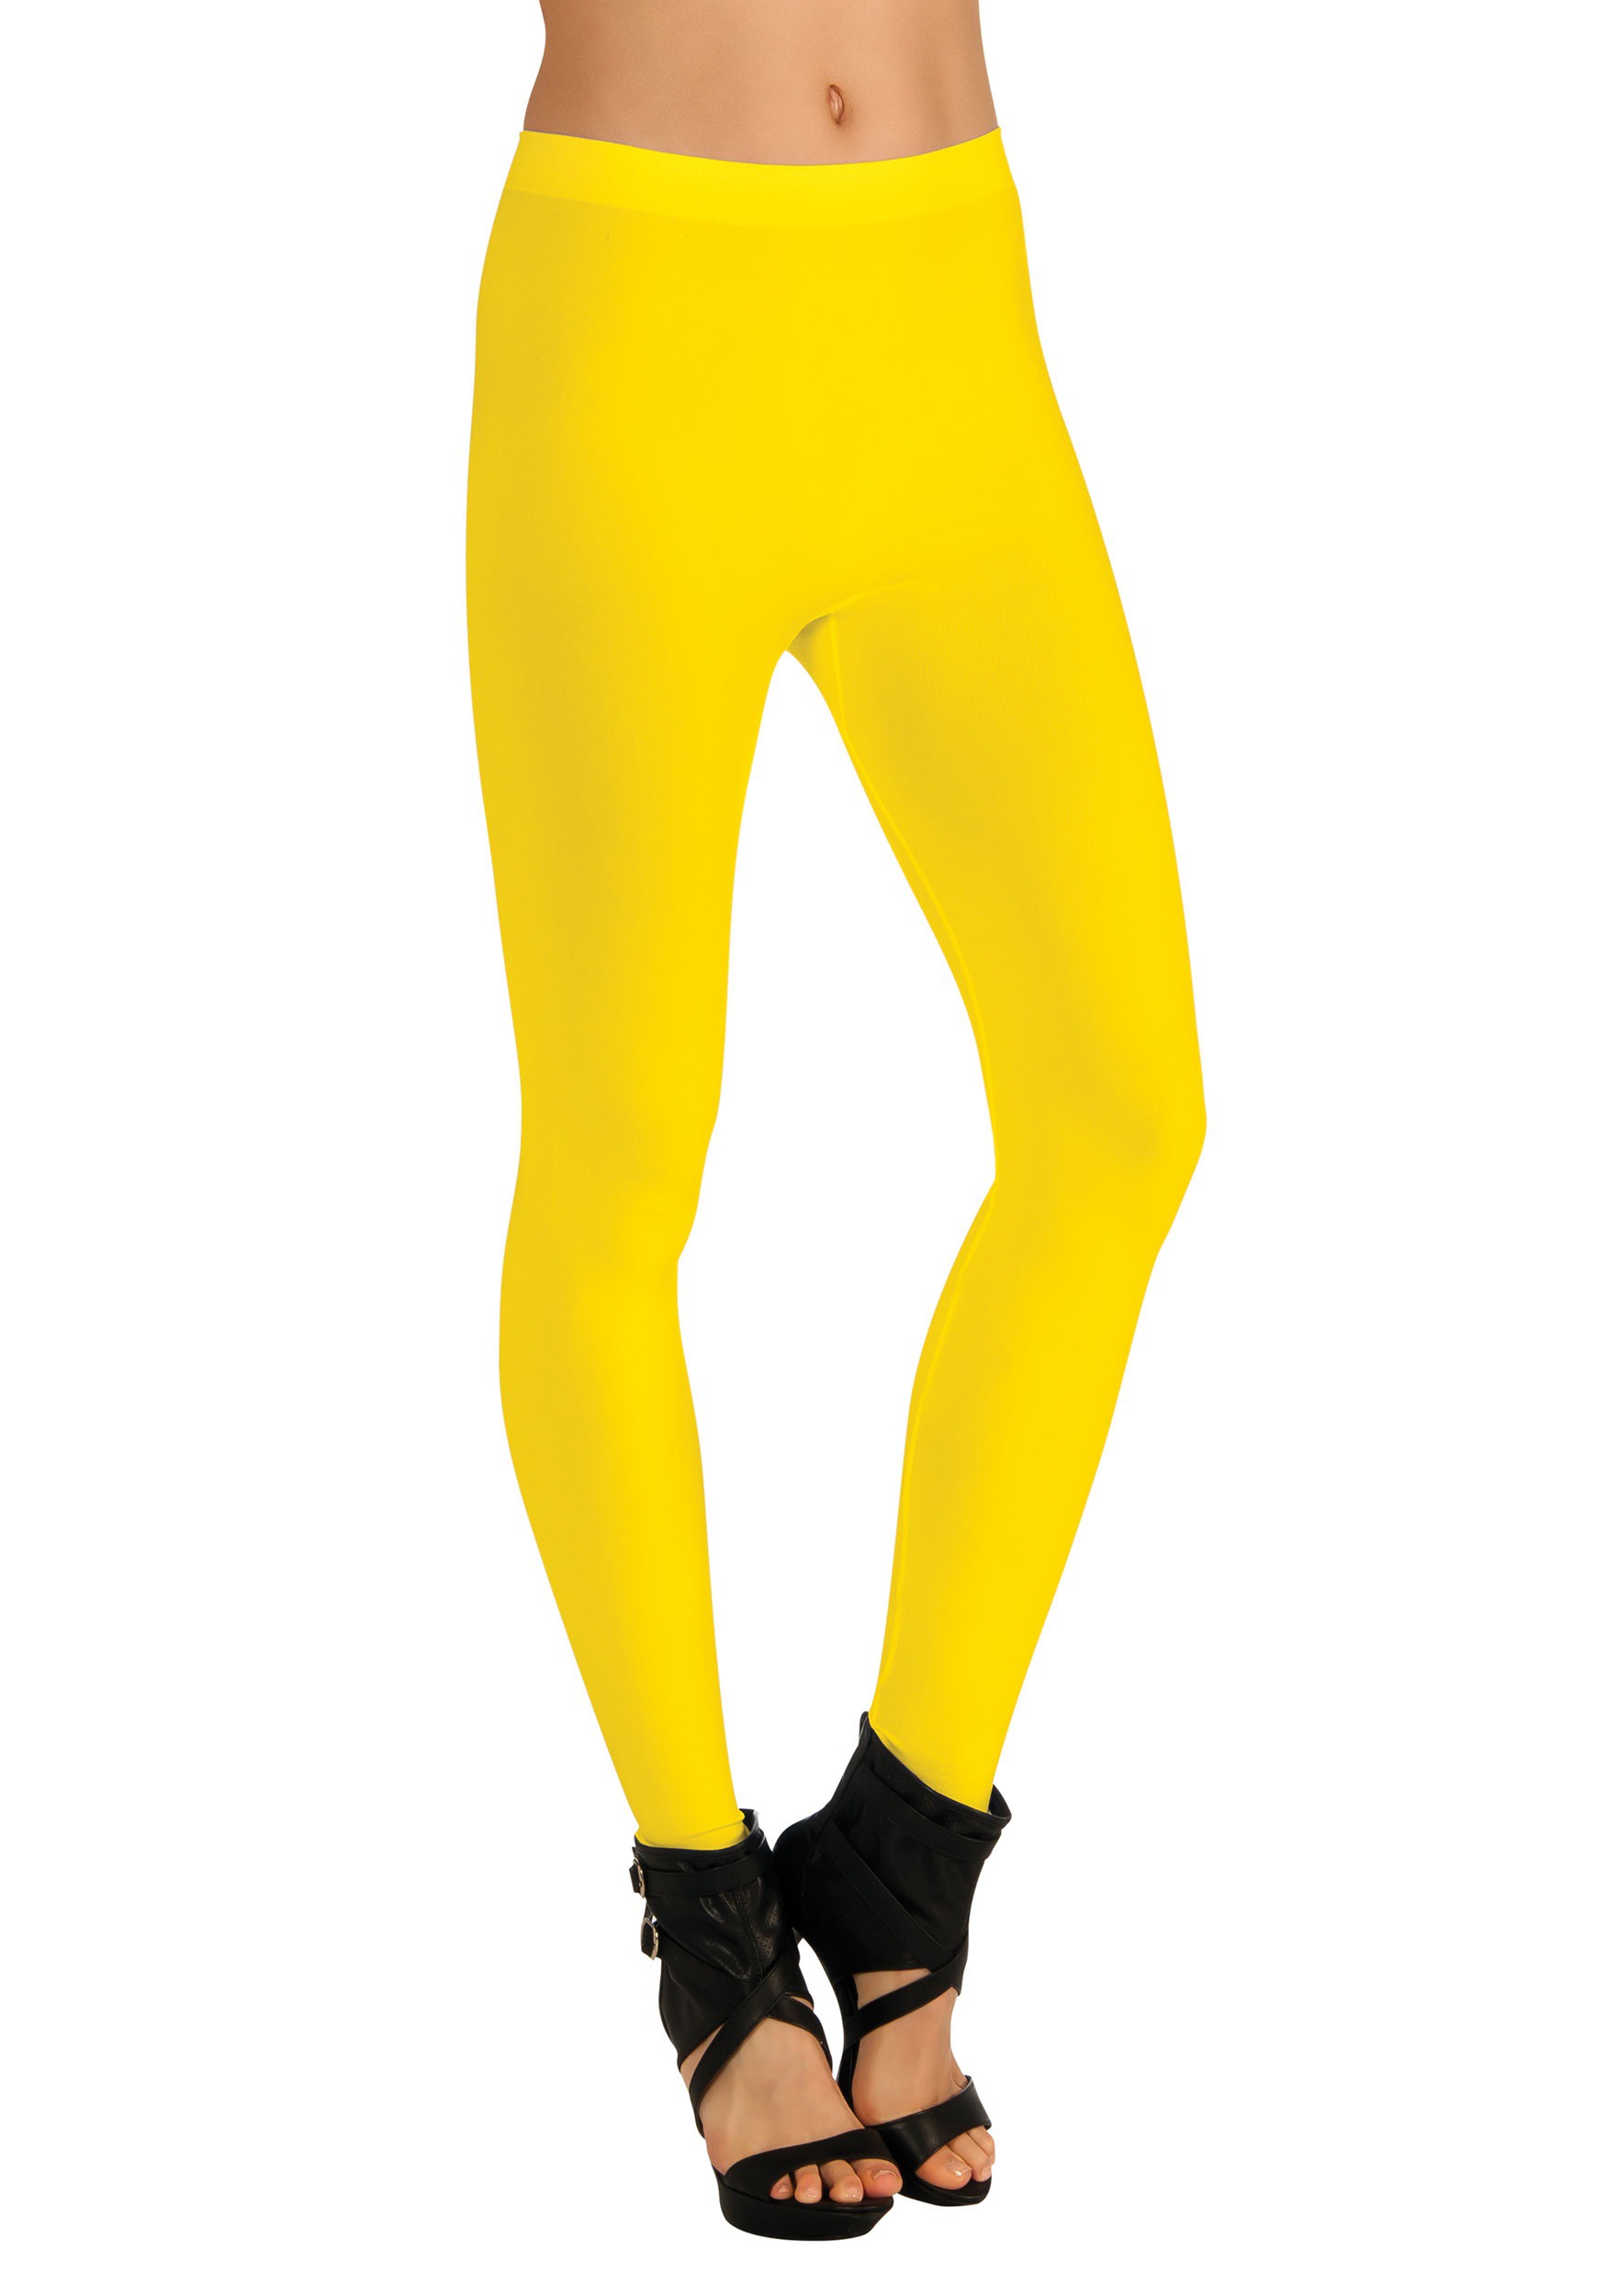 https://images.fun.com/products/34565/1-1/womens-yellow-leggings.jpg